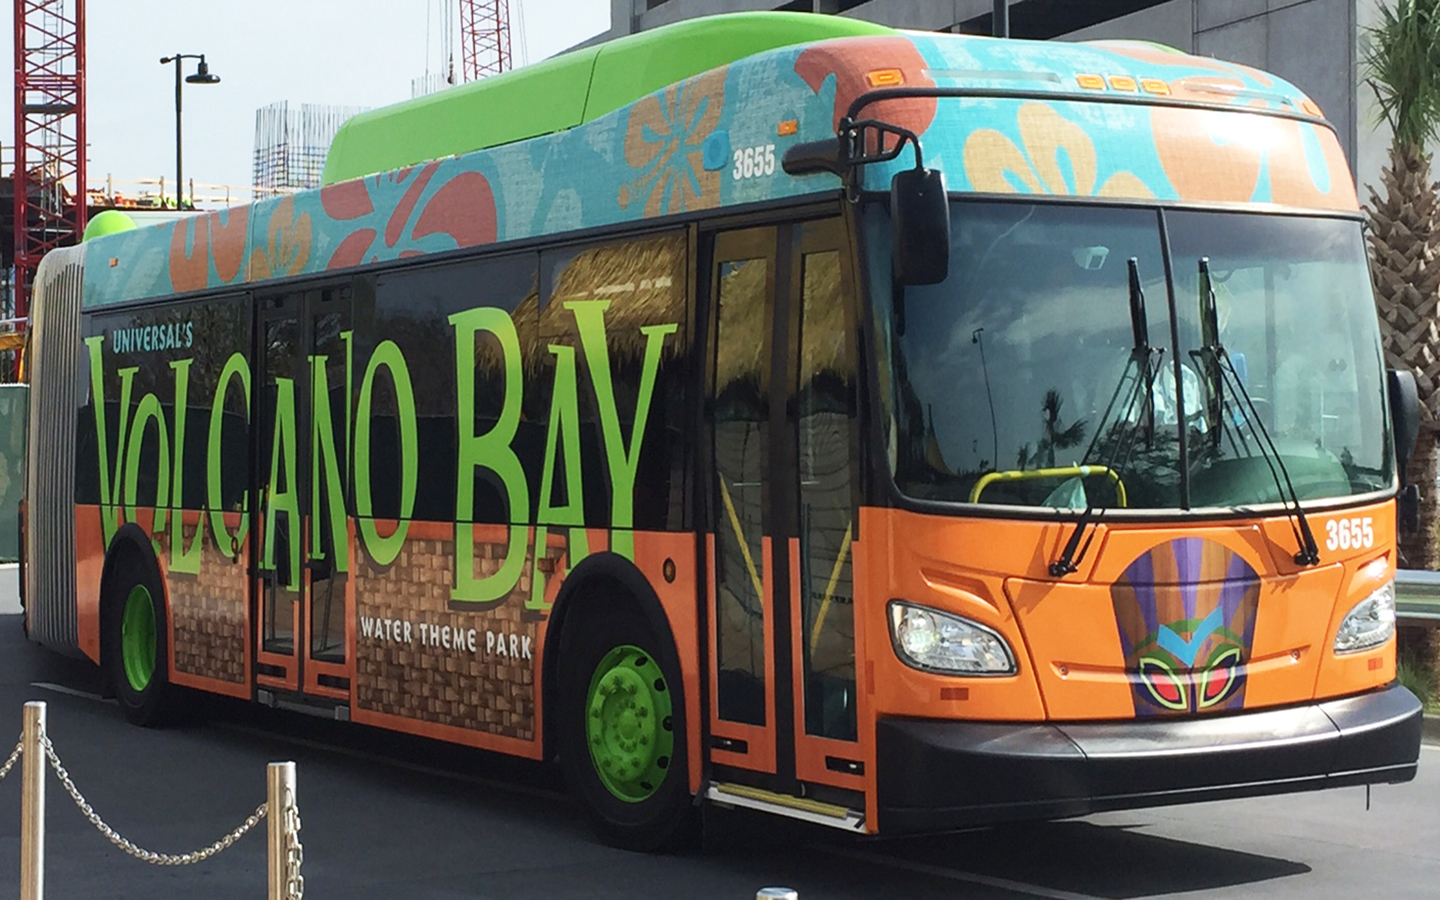 Universal-Volcano-Bay-Shuttle-Bus